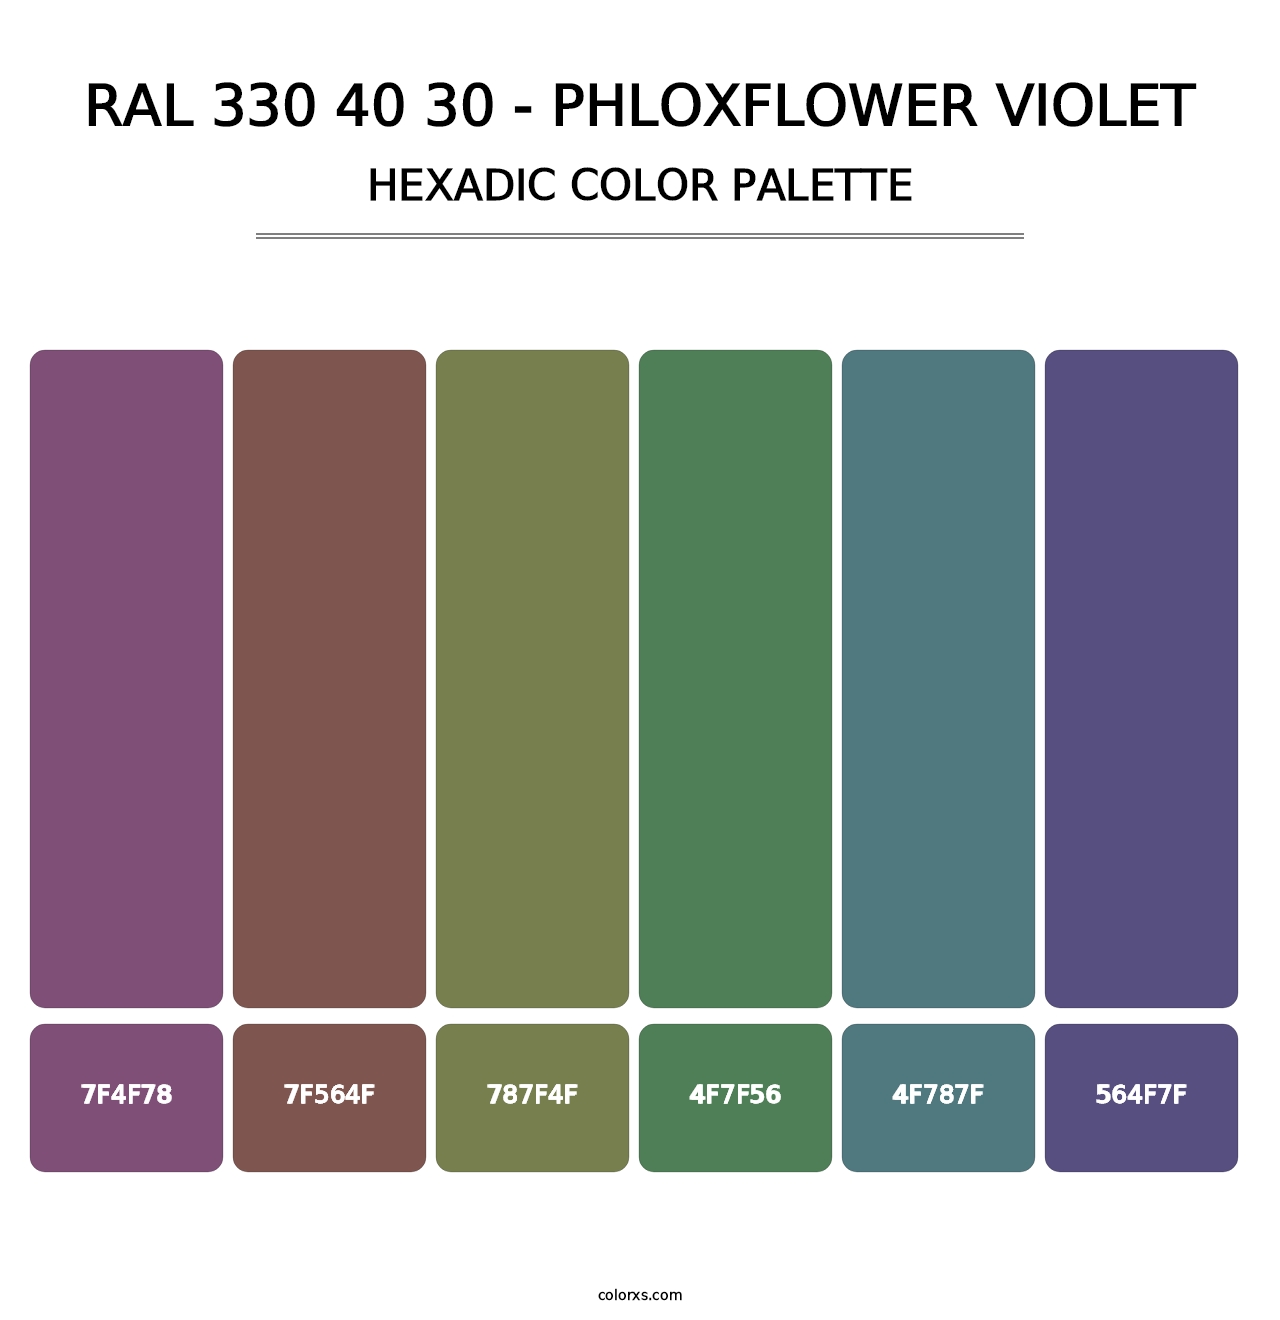 RAL 330 40 30 - Phloxflower Violet - Hexadic Color Palette